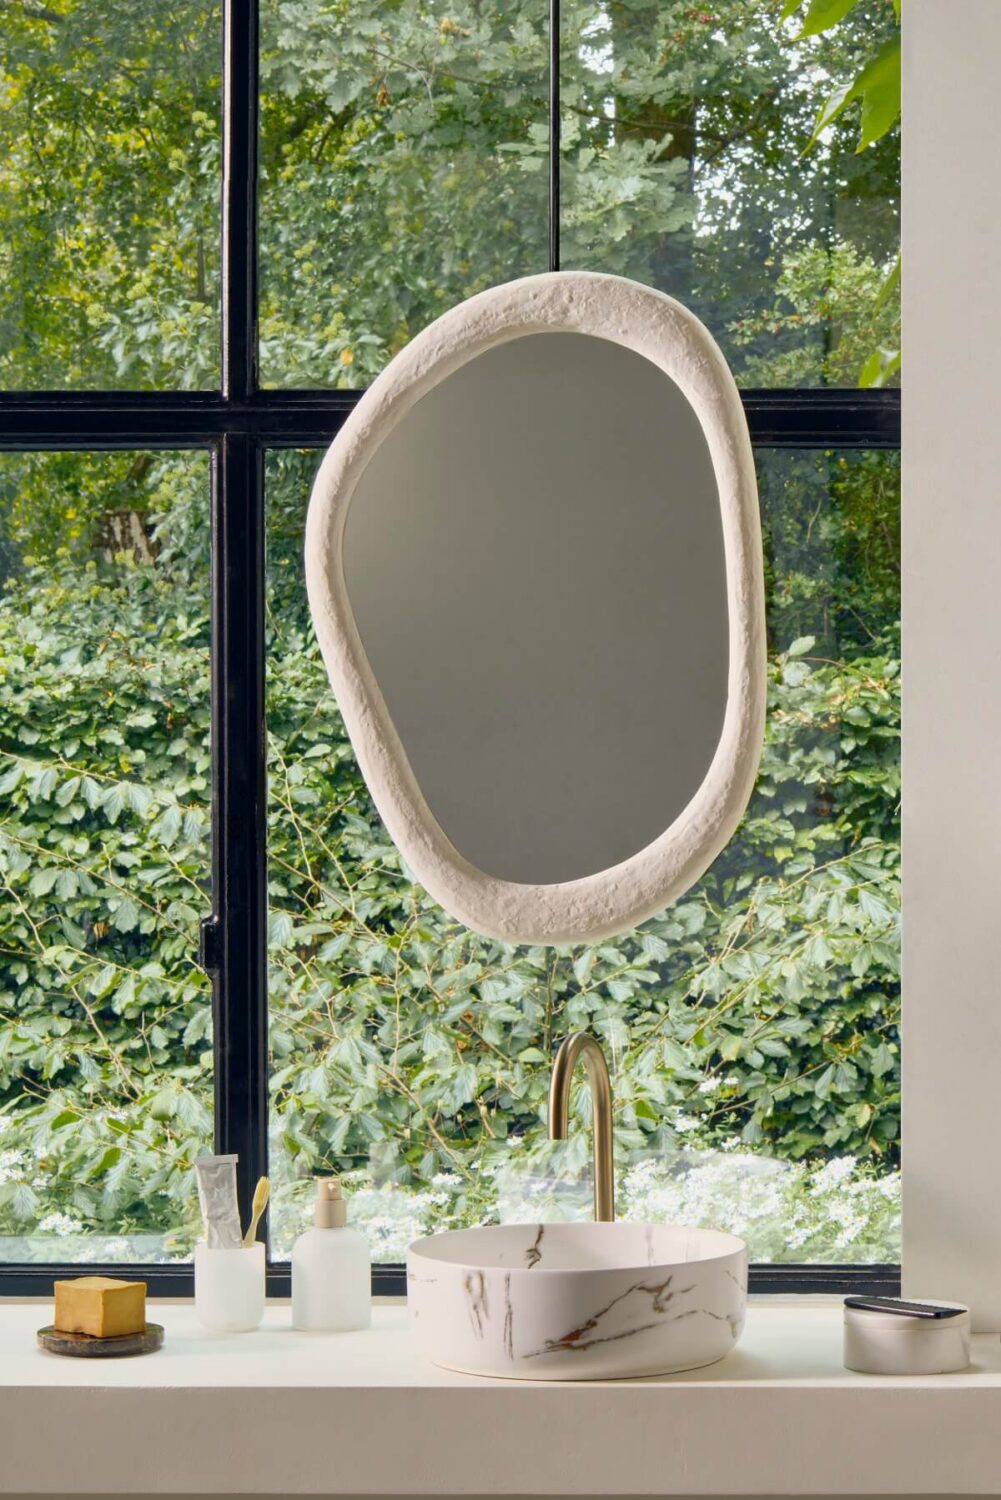 hm-home-collection-spring-mirror-nordroom